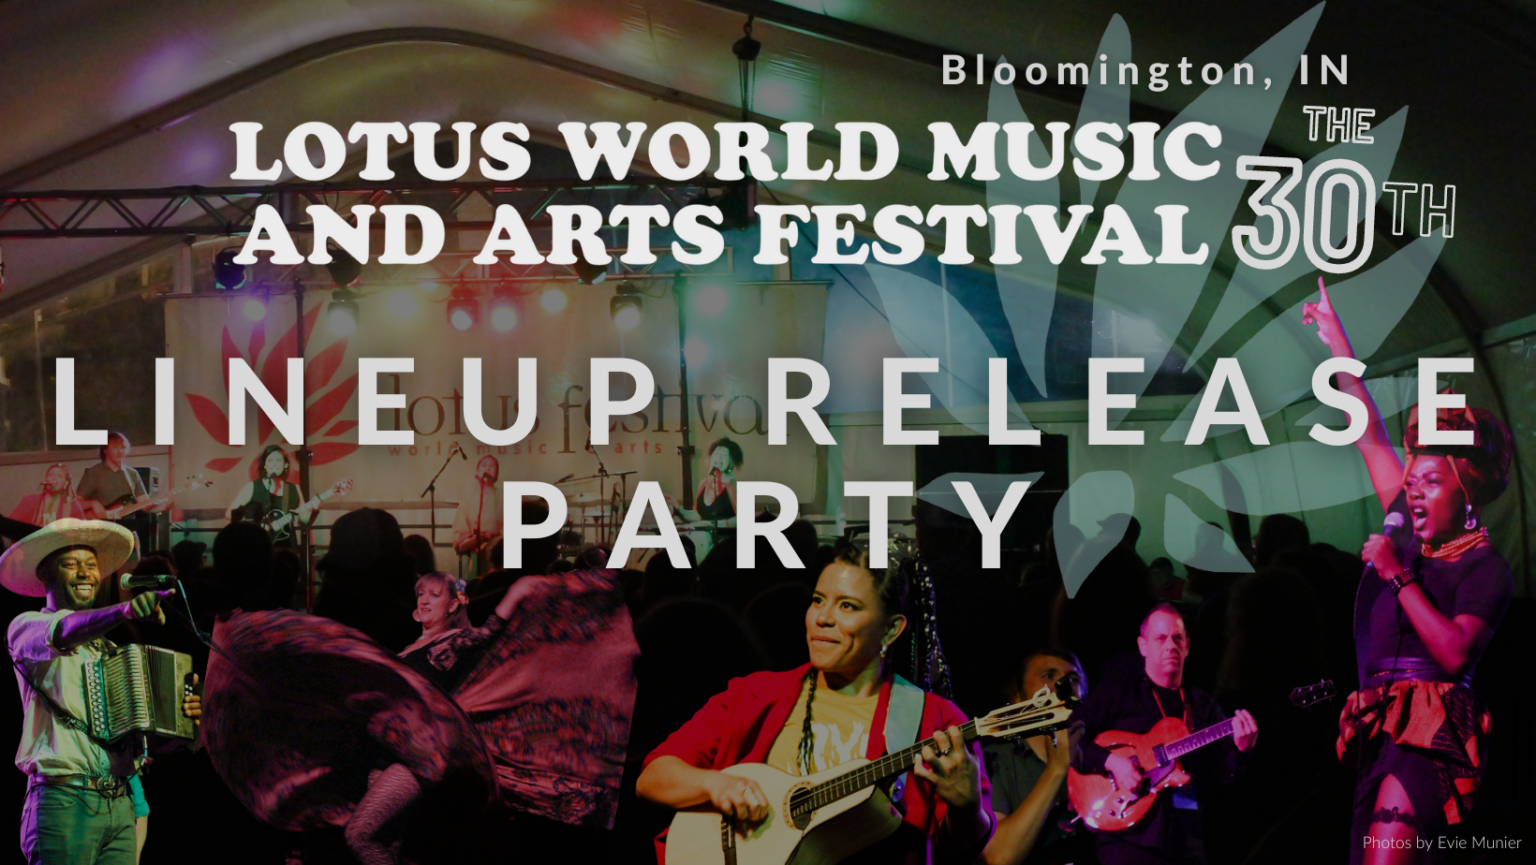 Lotus World Music and Arts Festival Lotus